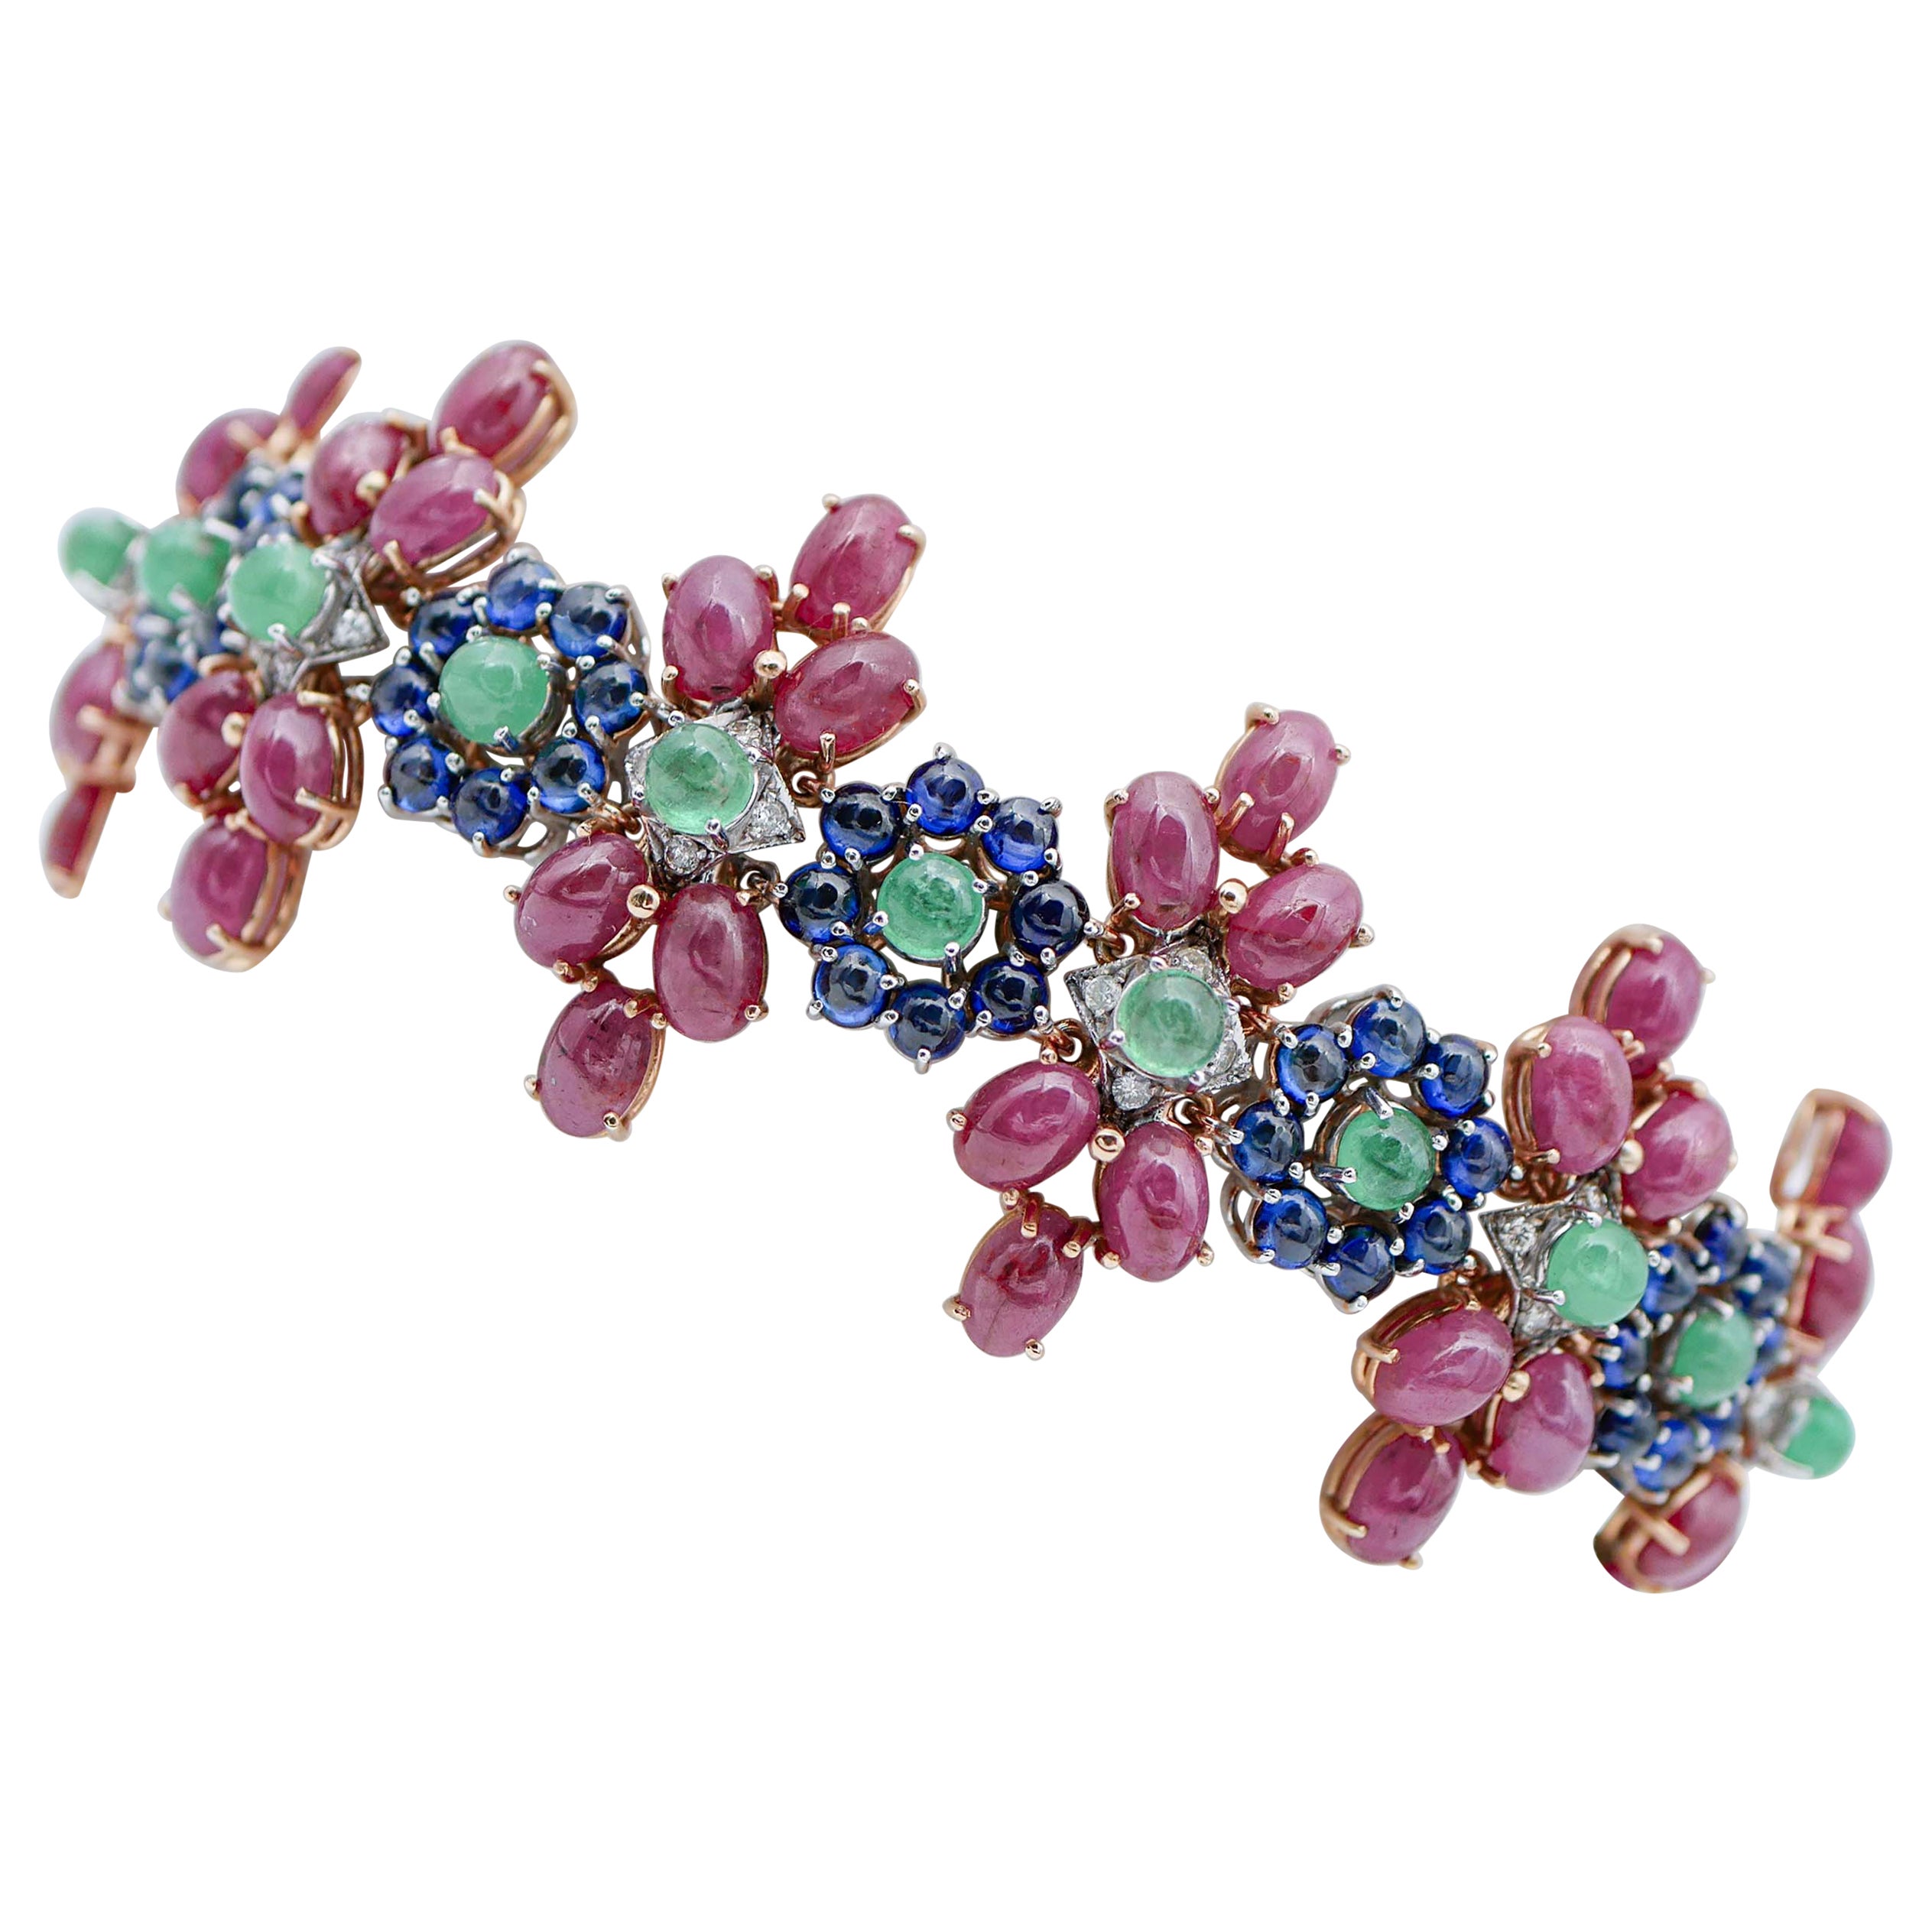 Rubies, Emeralds, Sapphires, 14 Karat White and Rose Gold Bracelet For Sale